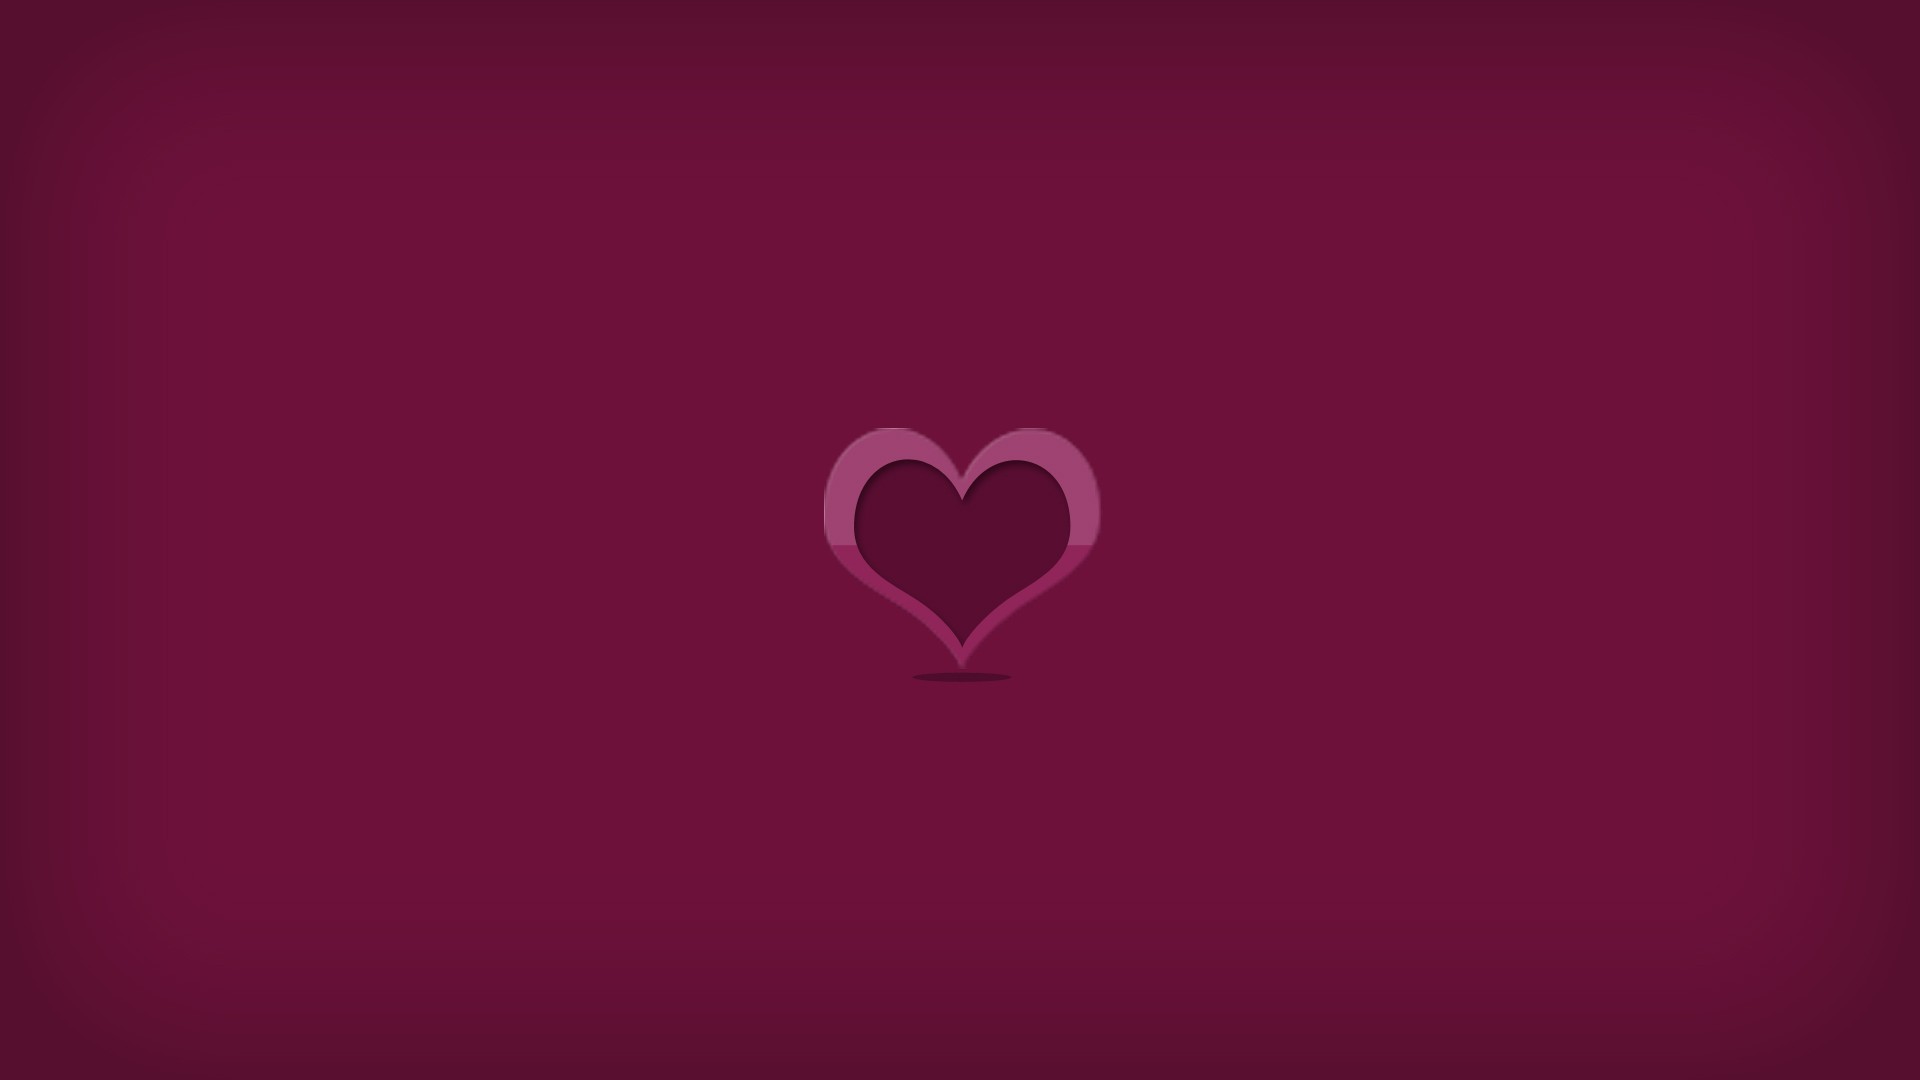 General 1920x1080 minimalism graphic design pink vector digital art heart (design)